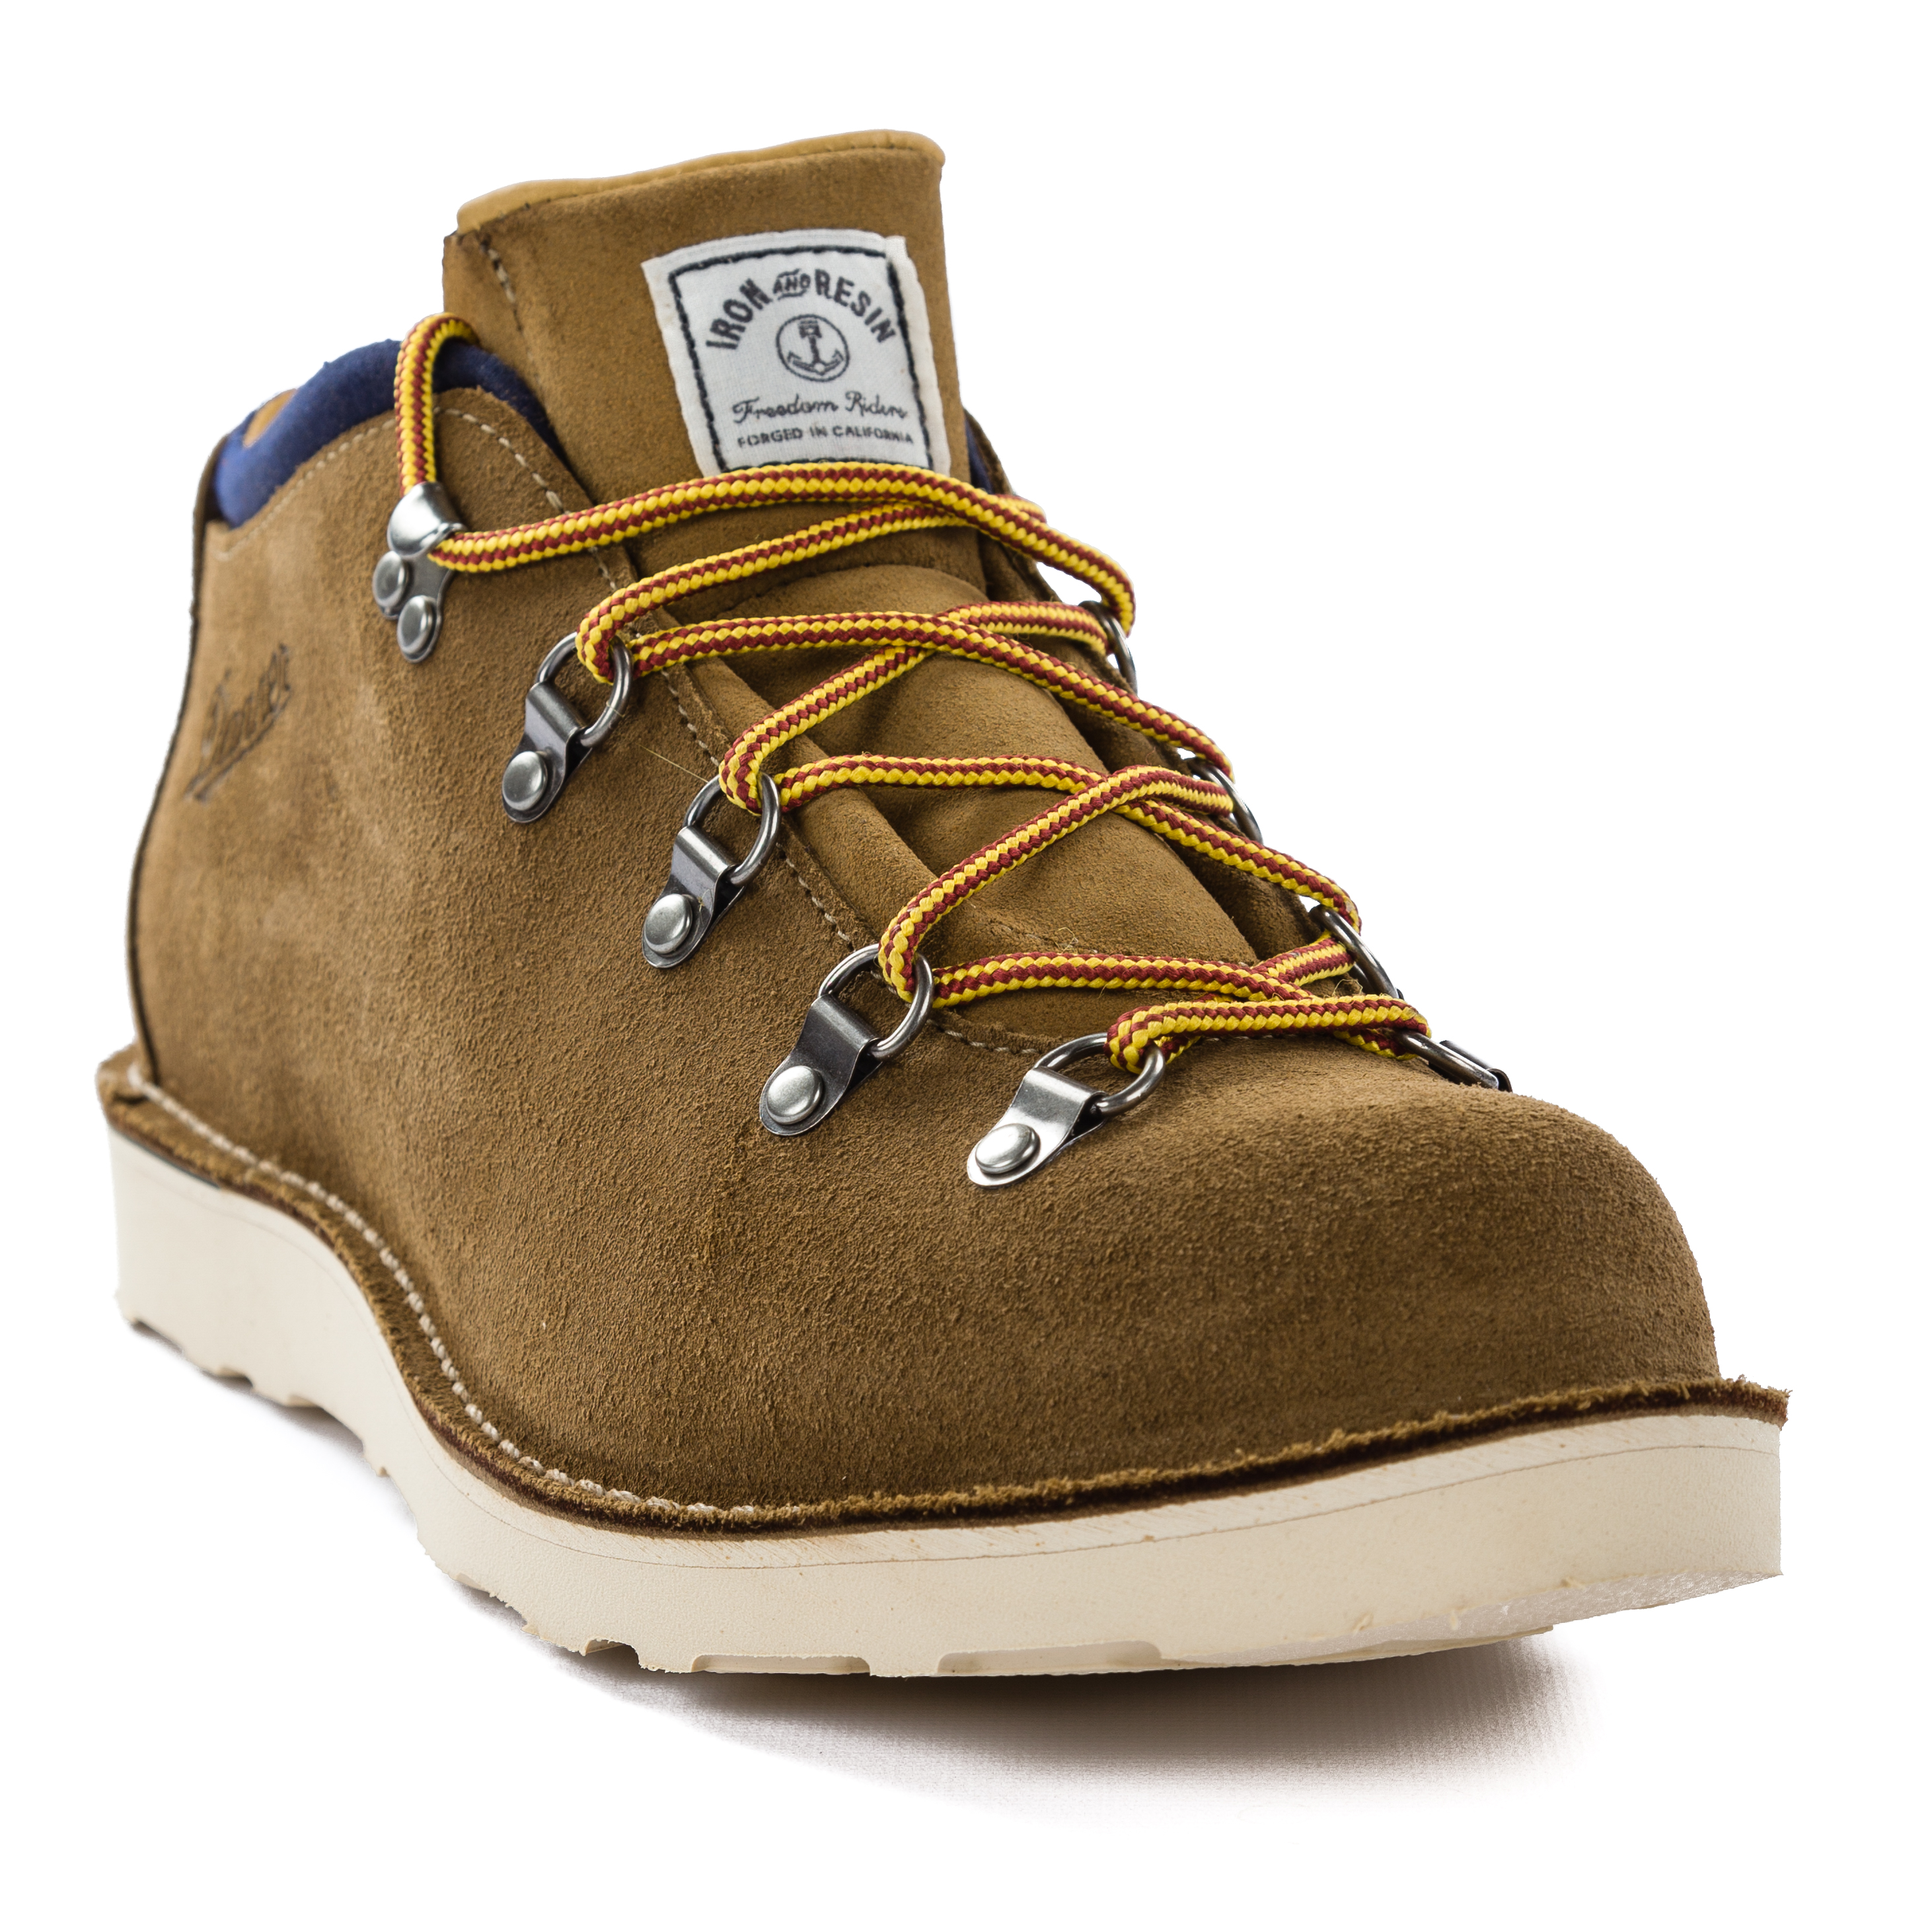 Danner Iron and Resin x Danner Tramline - Tan | Hiking Boots